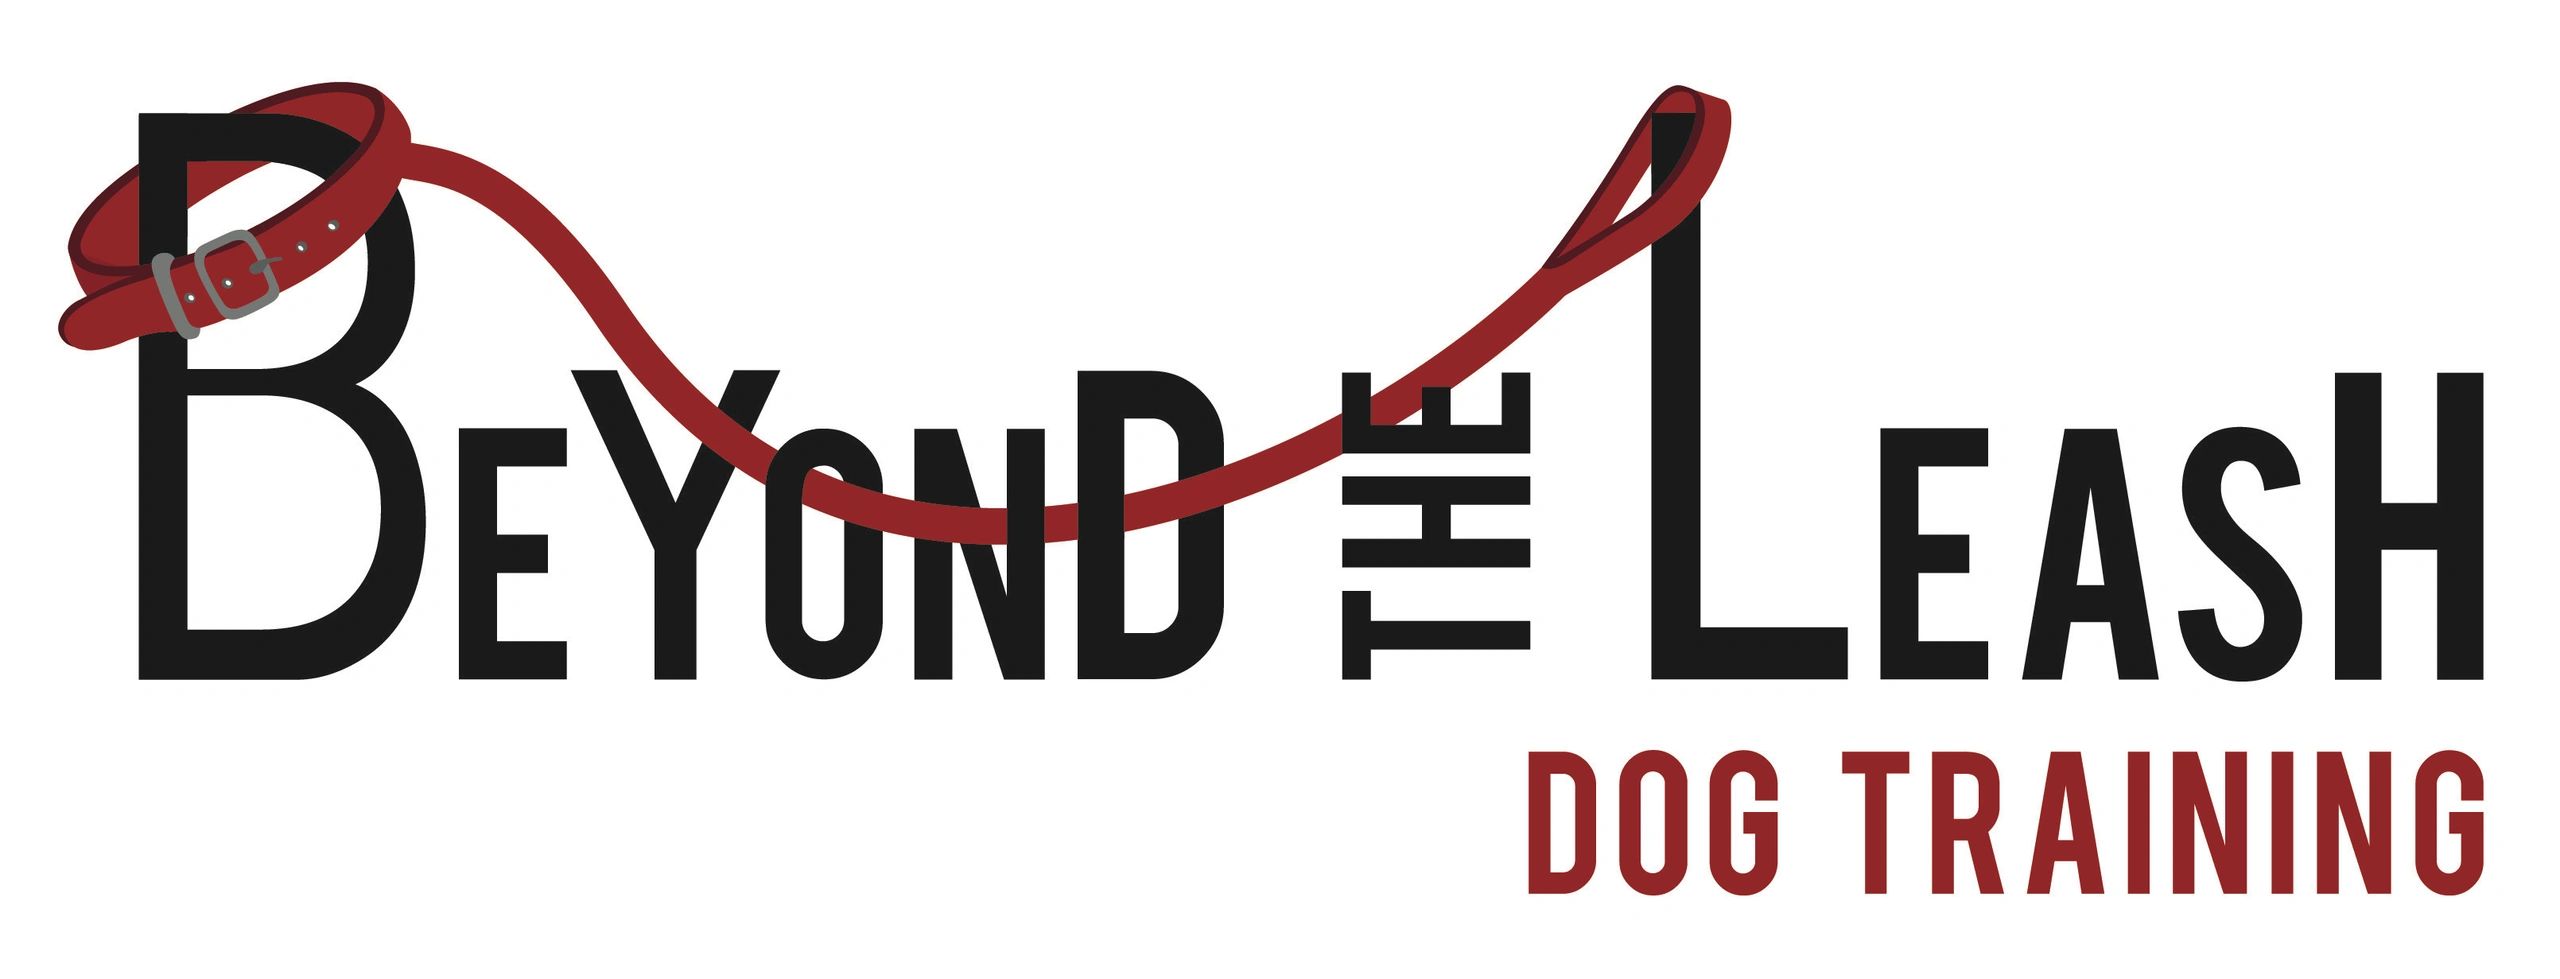 Dog Training - Beyond The Leash Dog 